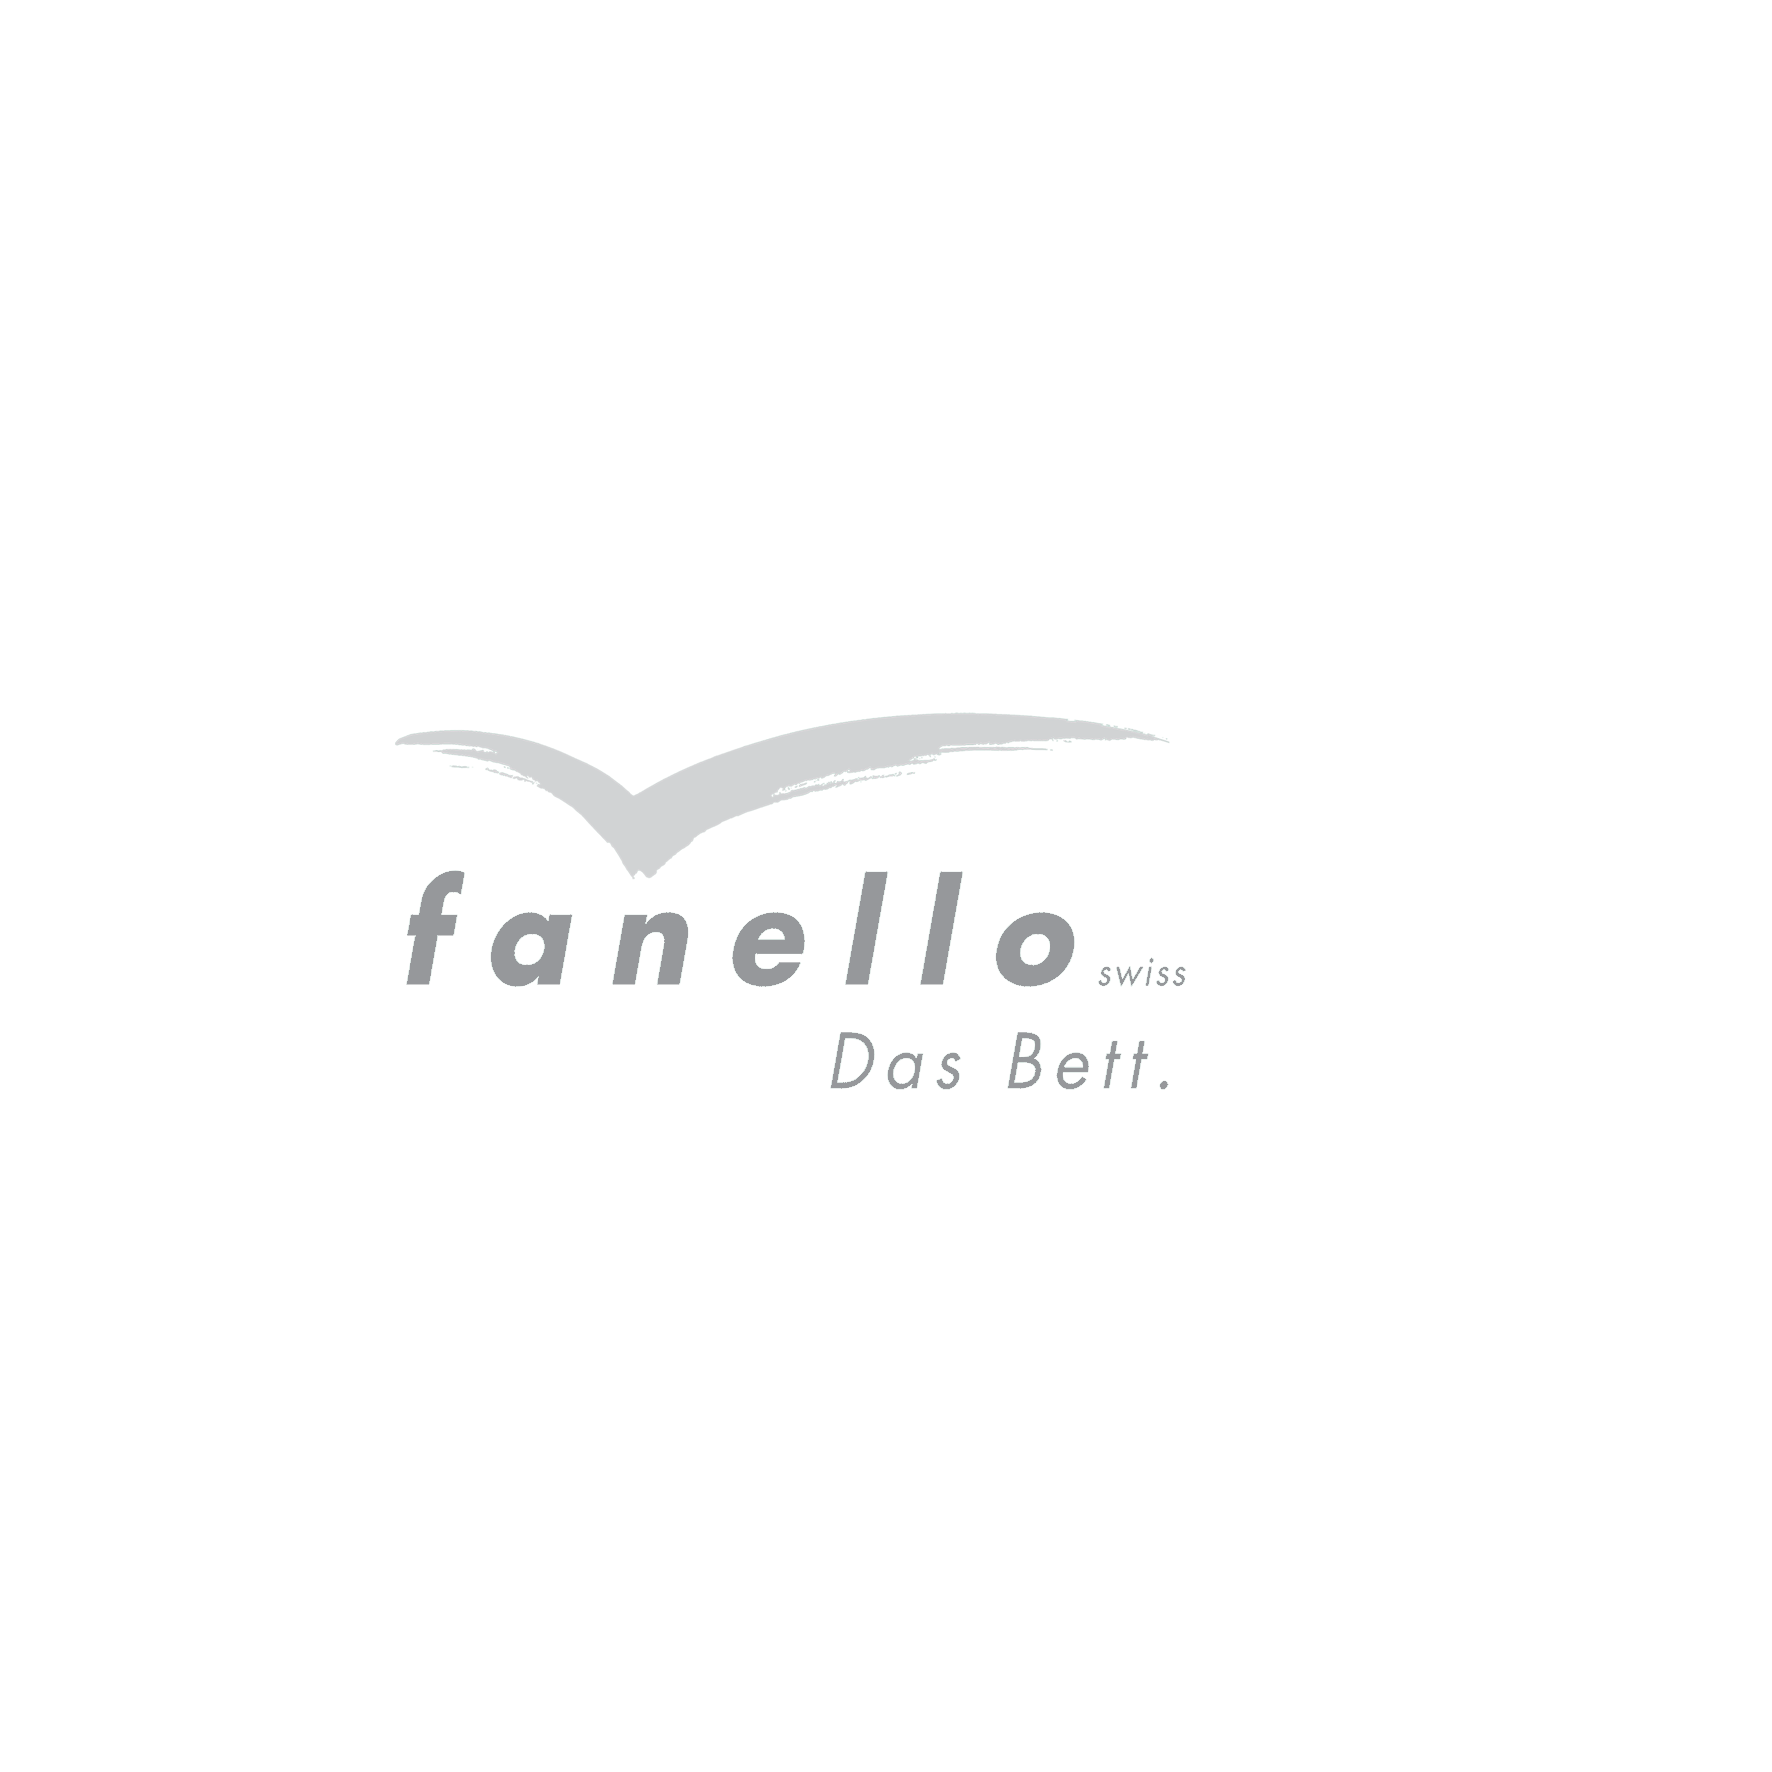 Fanello Bettsysteme Logo